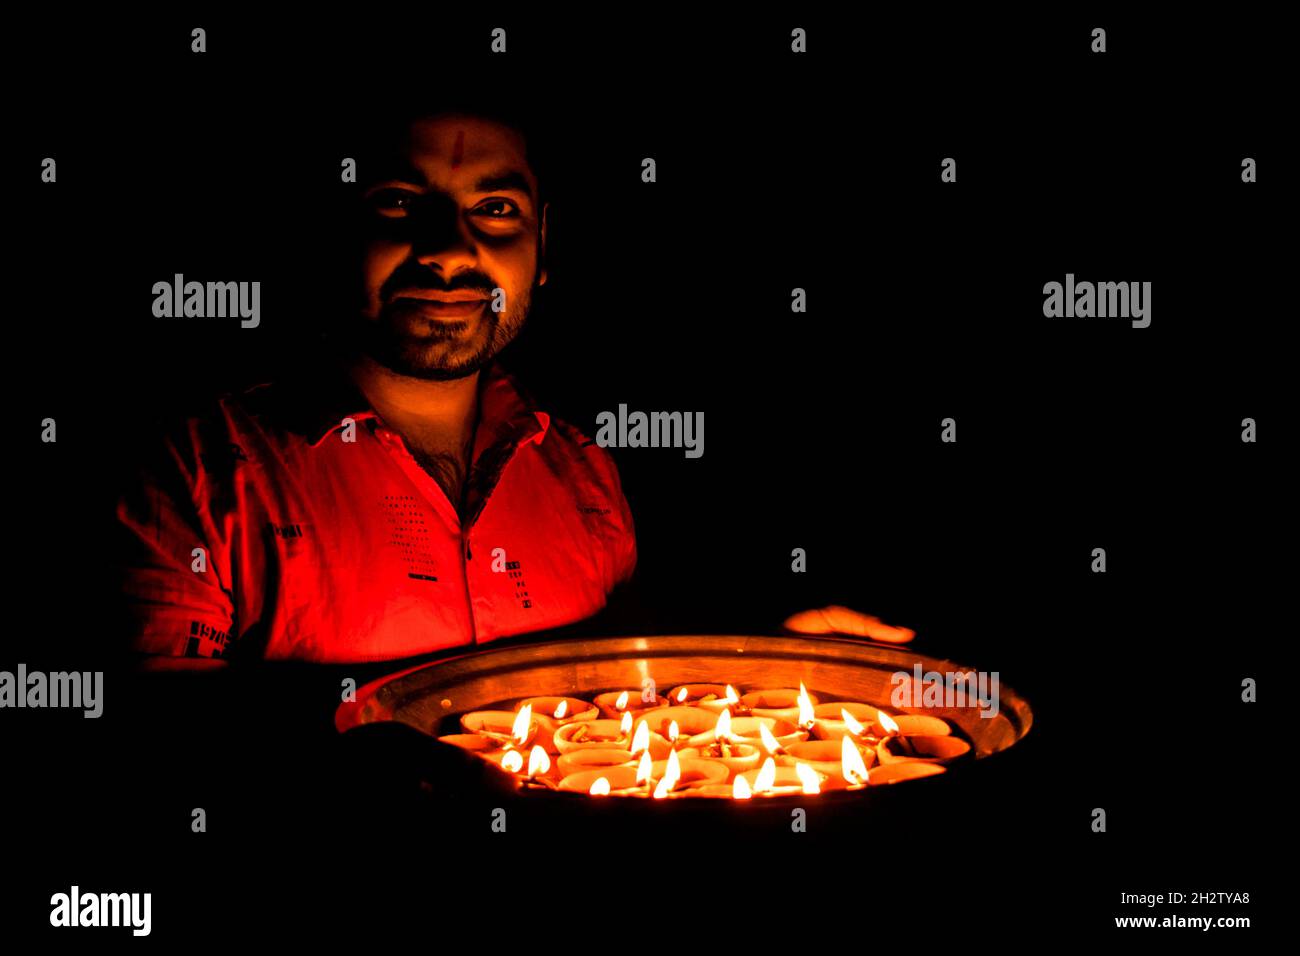 poses with diya | diwali poses #diwalipose #diya photoshoot ideas #diwali  poses | #diwali - YouTube